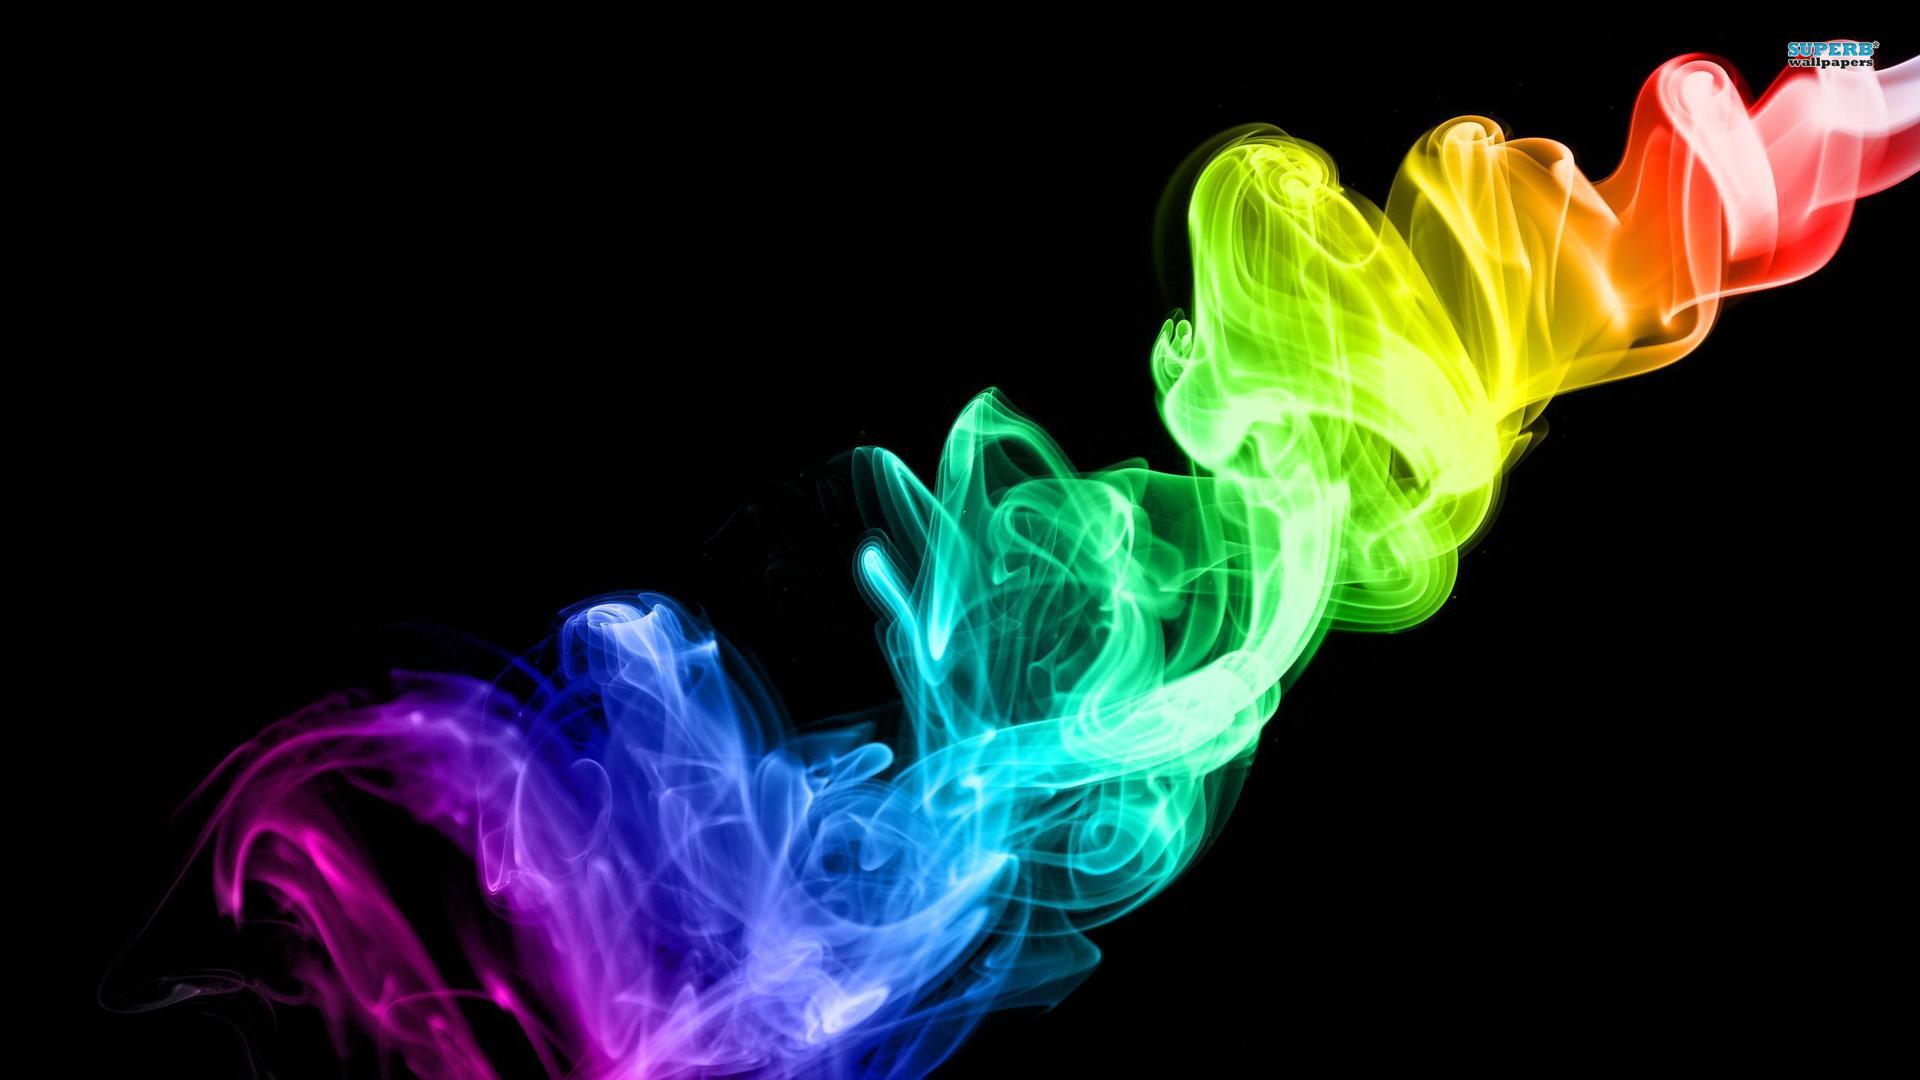 Colorful smoke : Desktop and mobile wallpaper : Wallippo